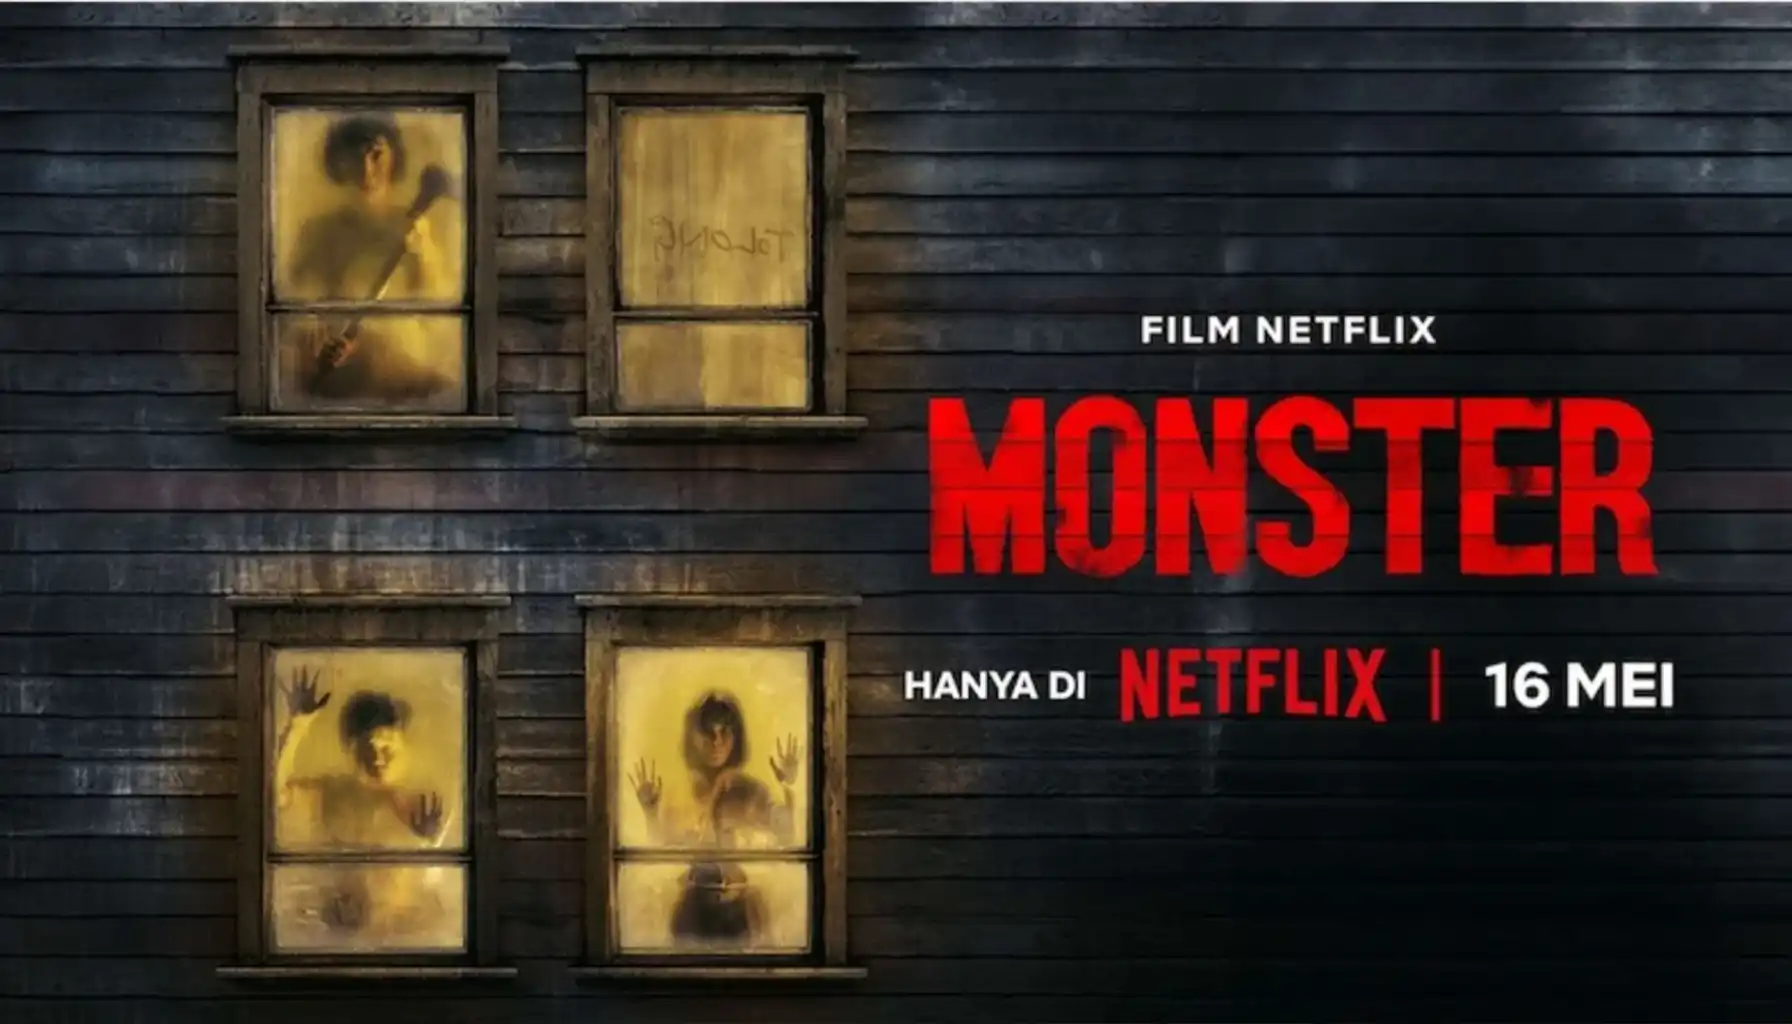 "Monster" adalah film tanpa dialog yang tayang di Netflix pada 16 Mei, menawarkan cerita menegangkan dengan pendekatan visual unik.